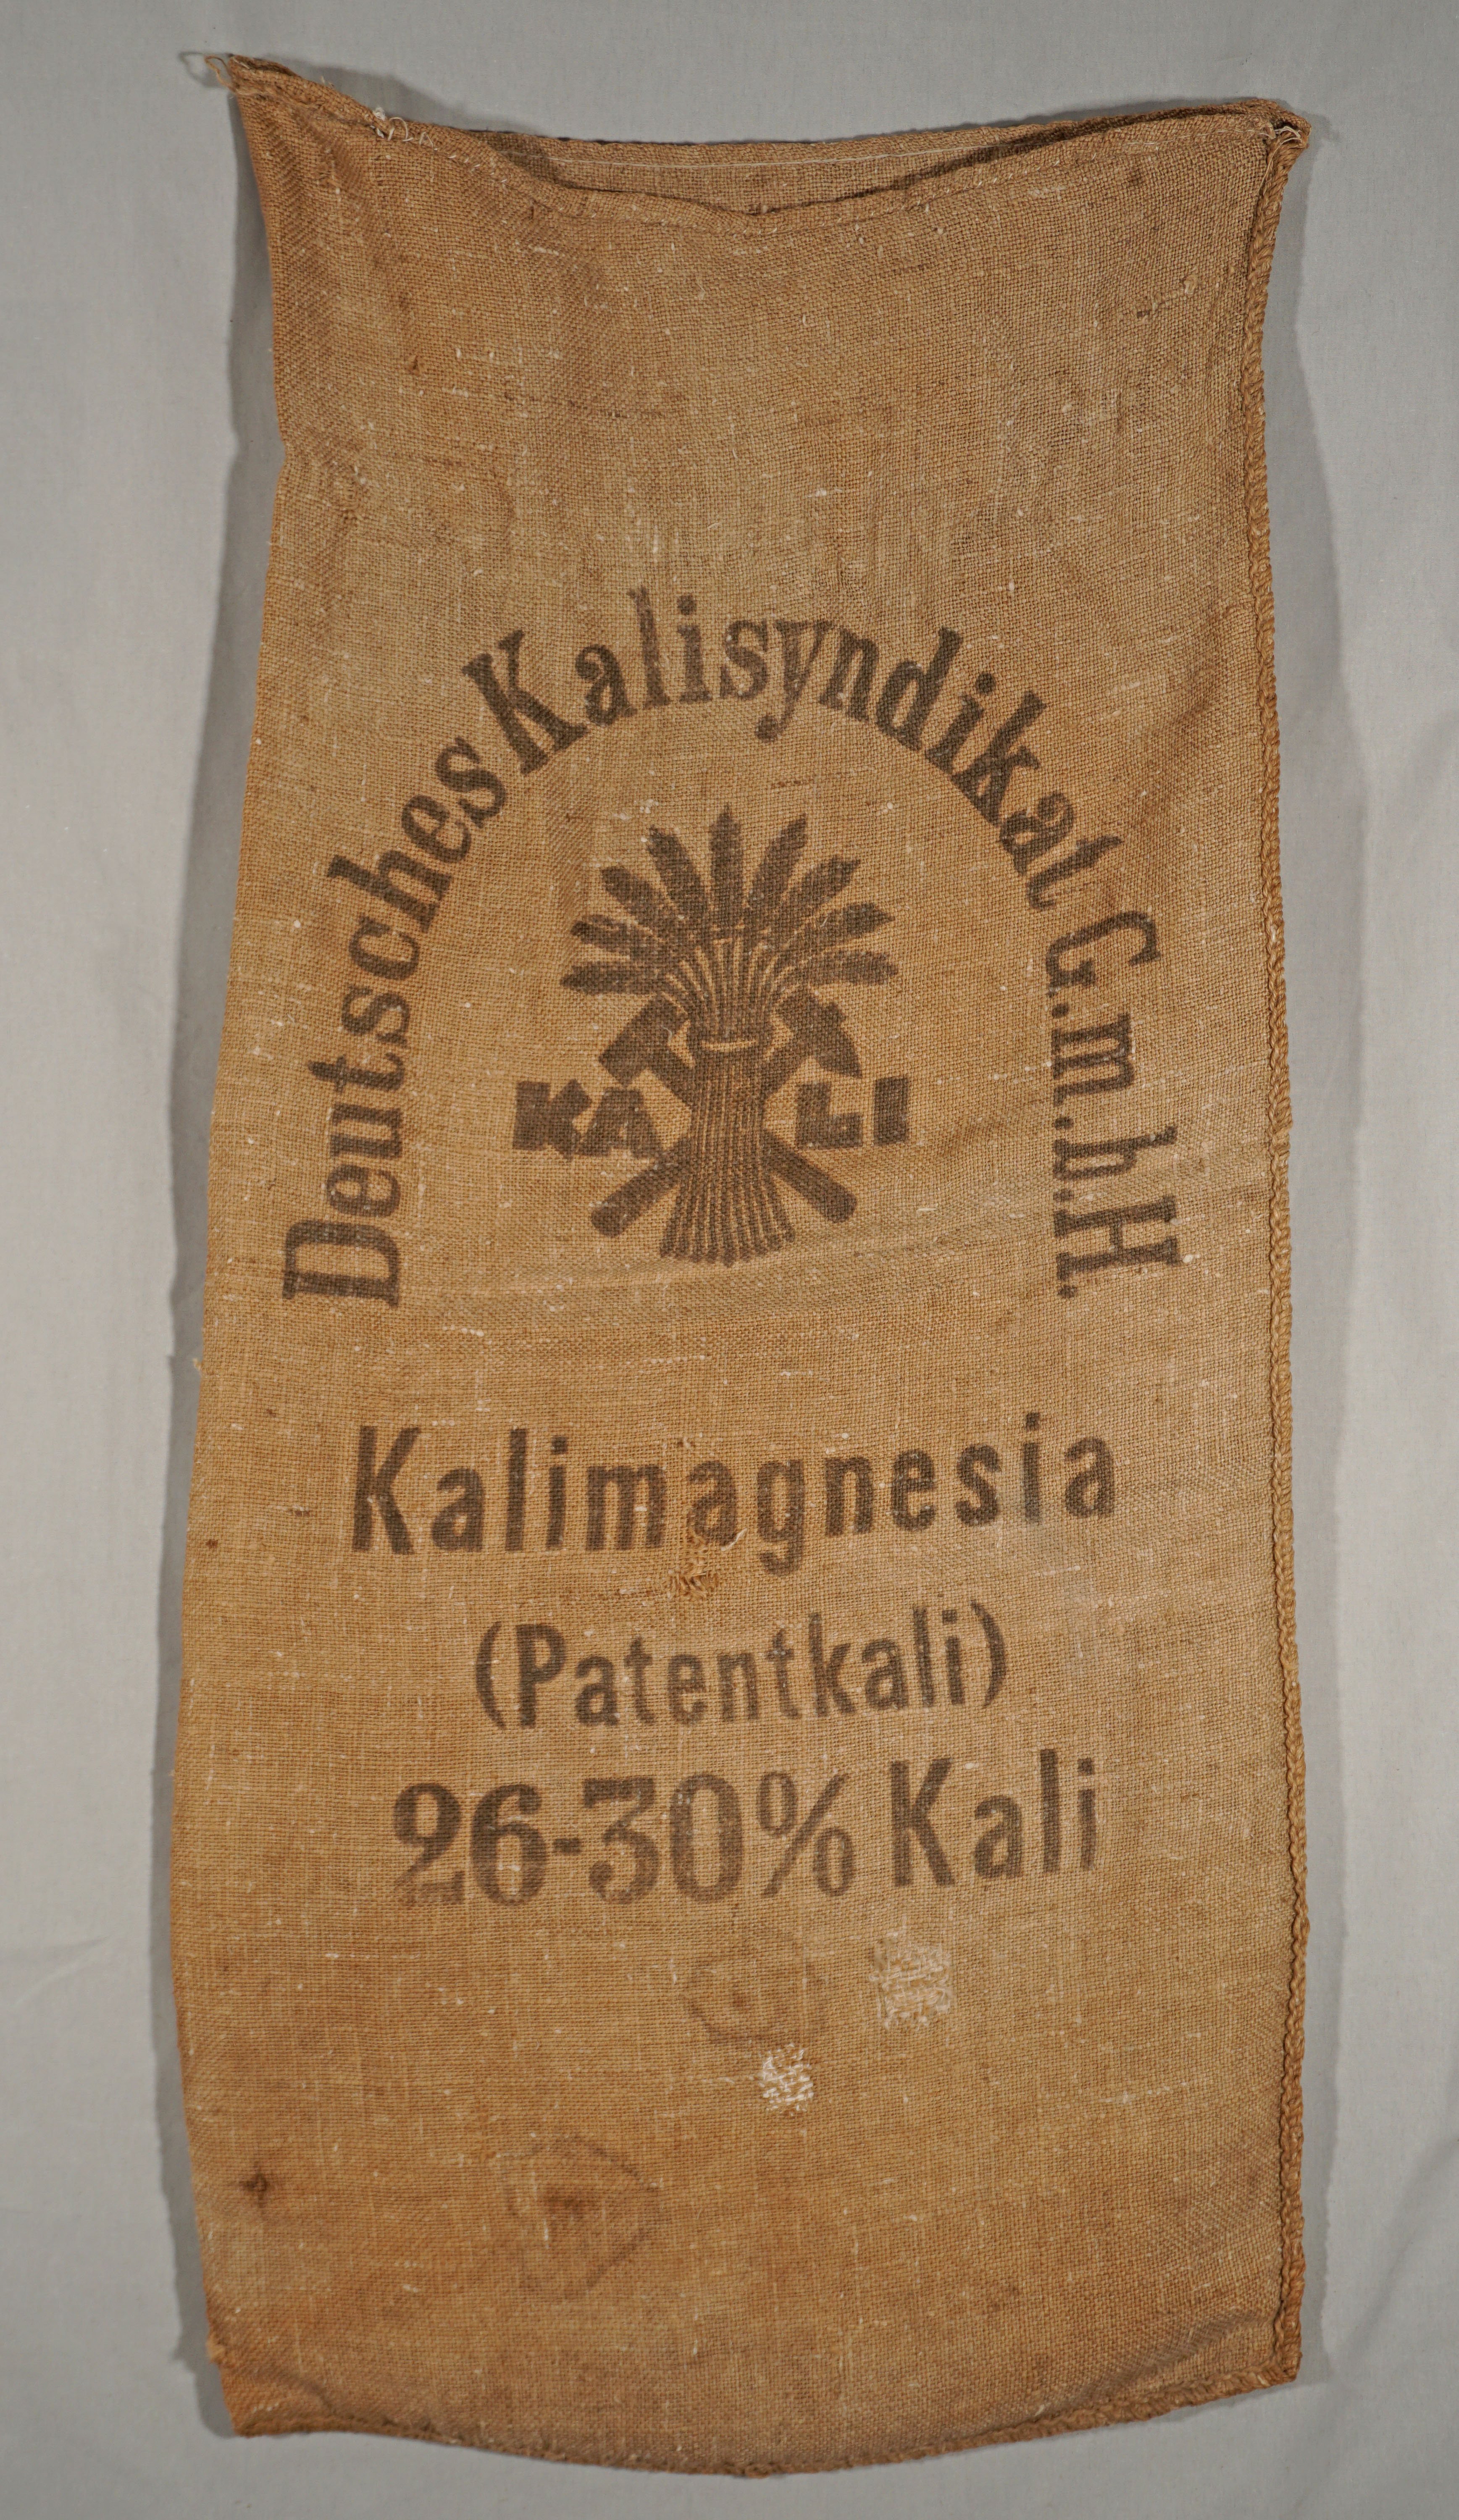 Jutesack für Kalimagnesia-Dünger (Patentkali) (Werra-Kalibergbau-Museum, Heringen/W. CC BY-NC-SA)